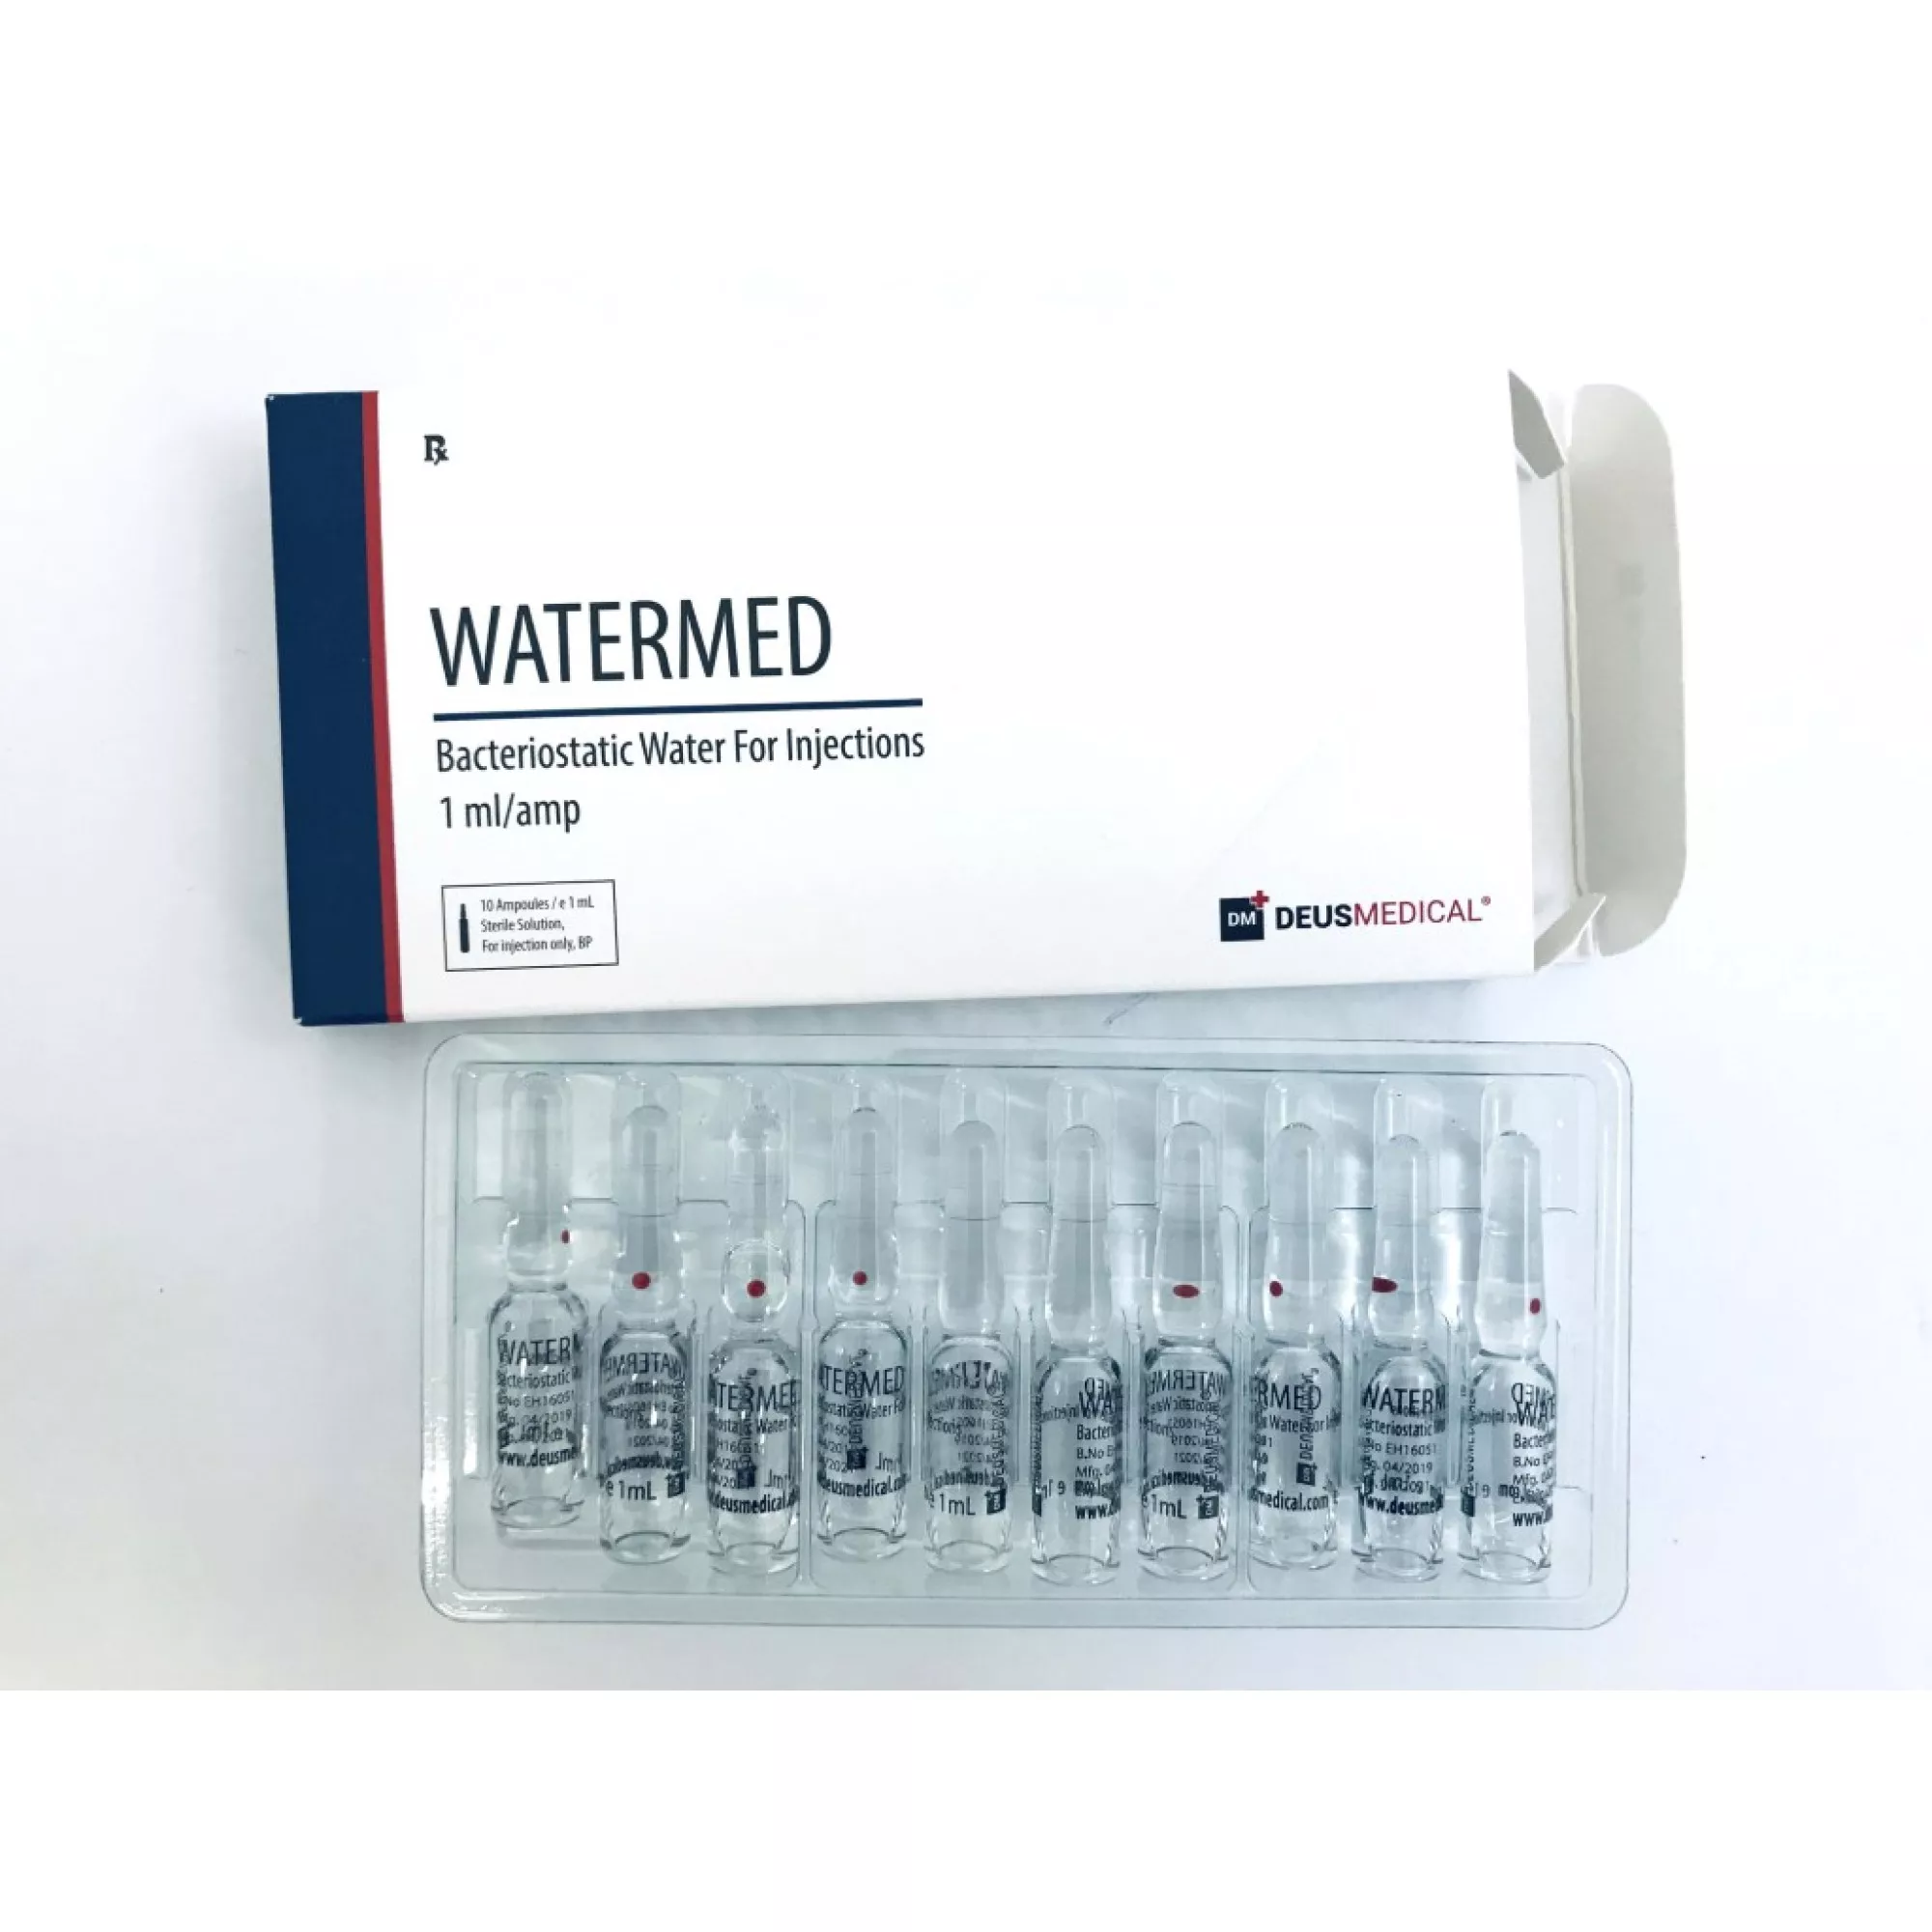 WATERMED (Bacteriostatic Water), Deus Medical, Buy Steroids Online - www.deuspower.shop